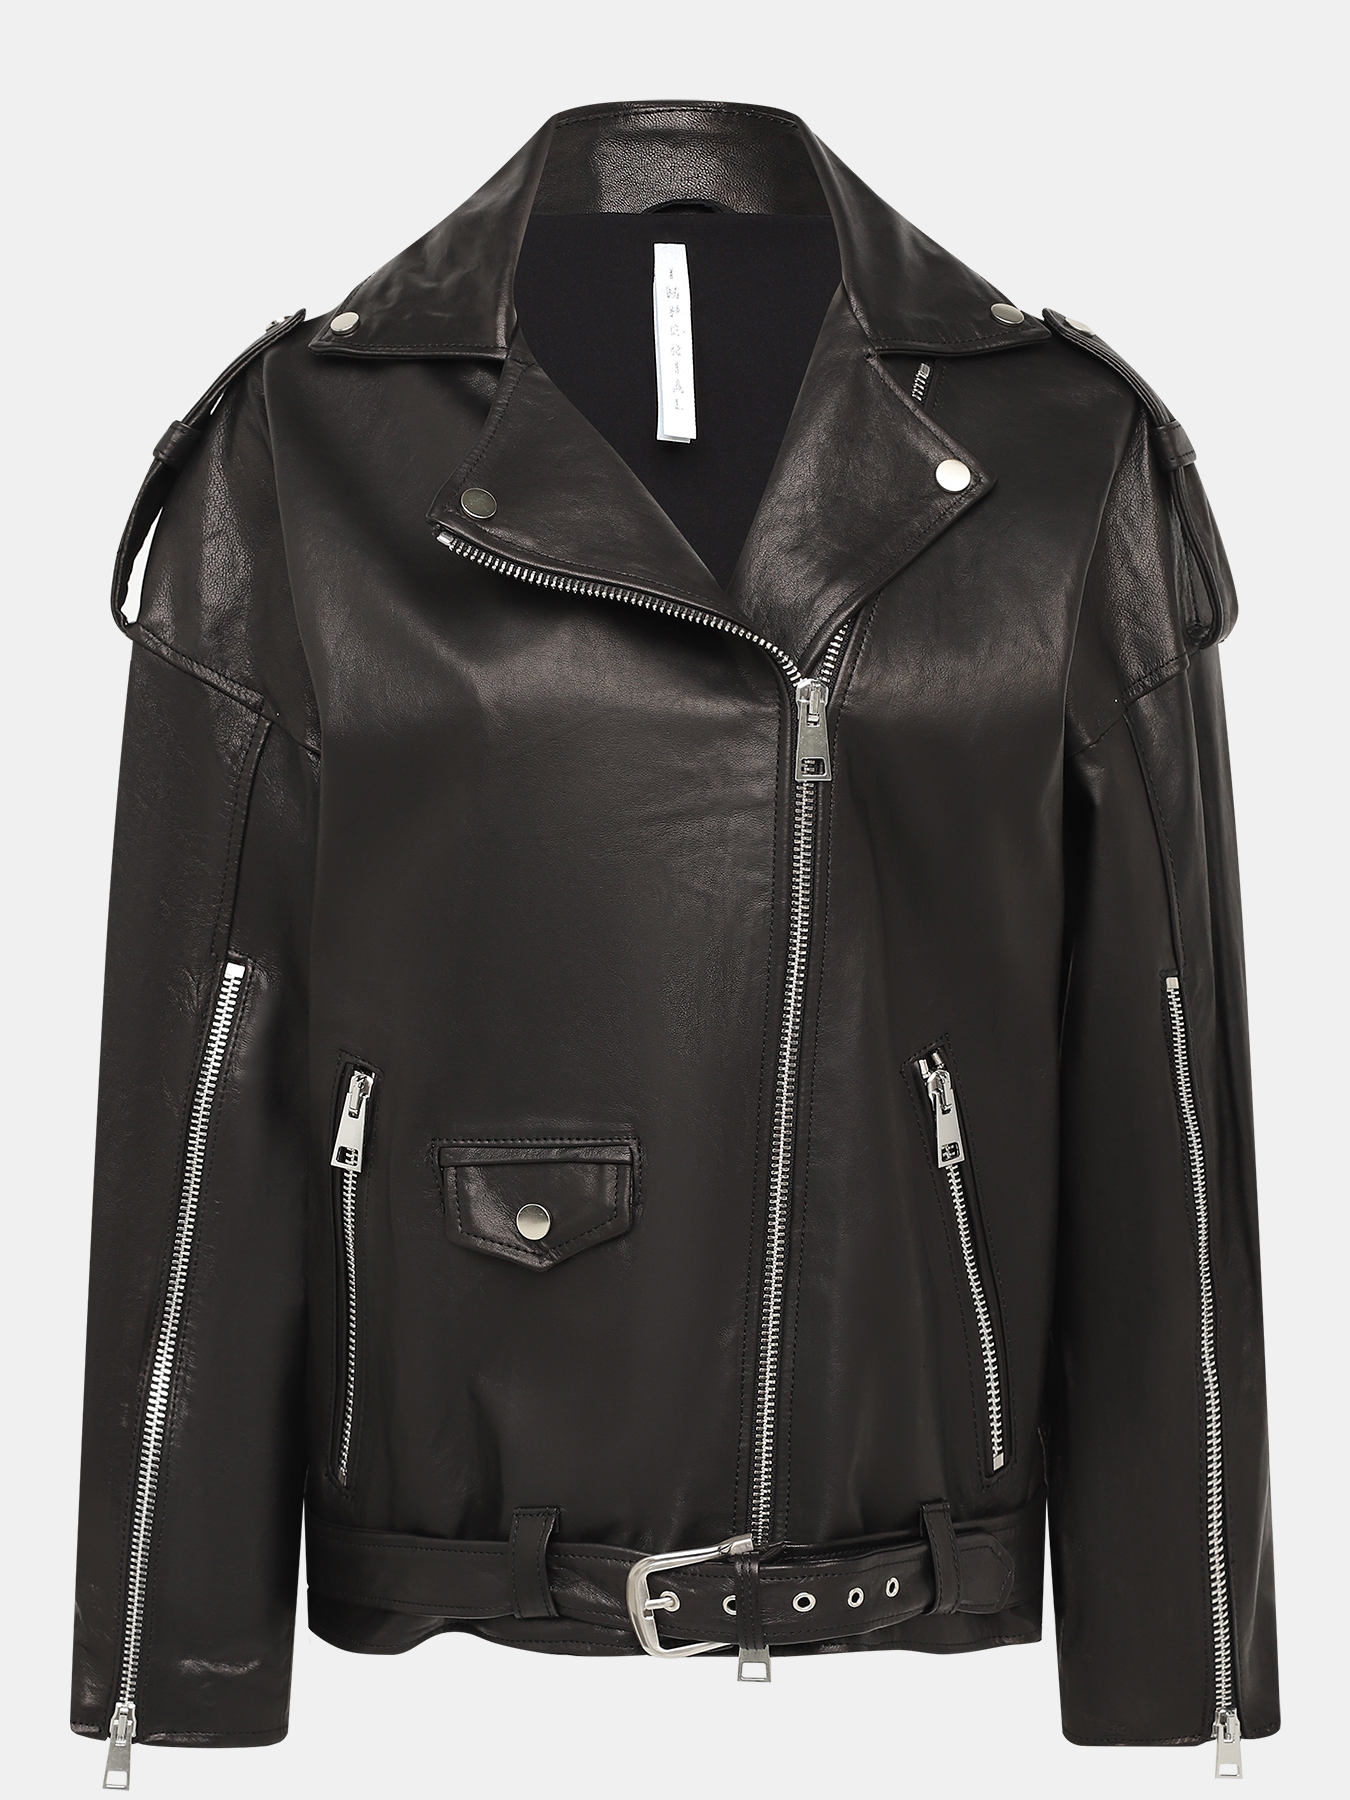 Кожаная куртка Imperial 424361-044, цвет черный, размер 46-48